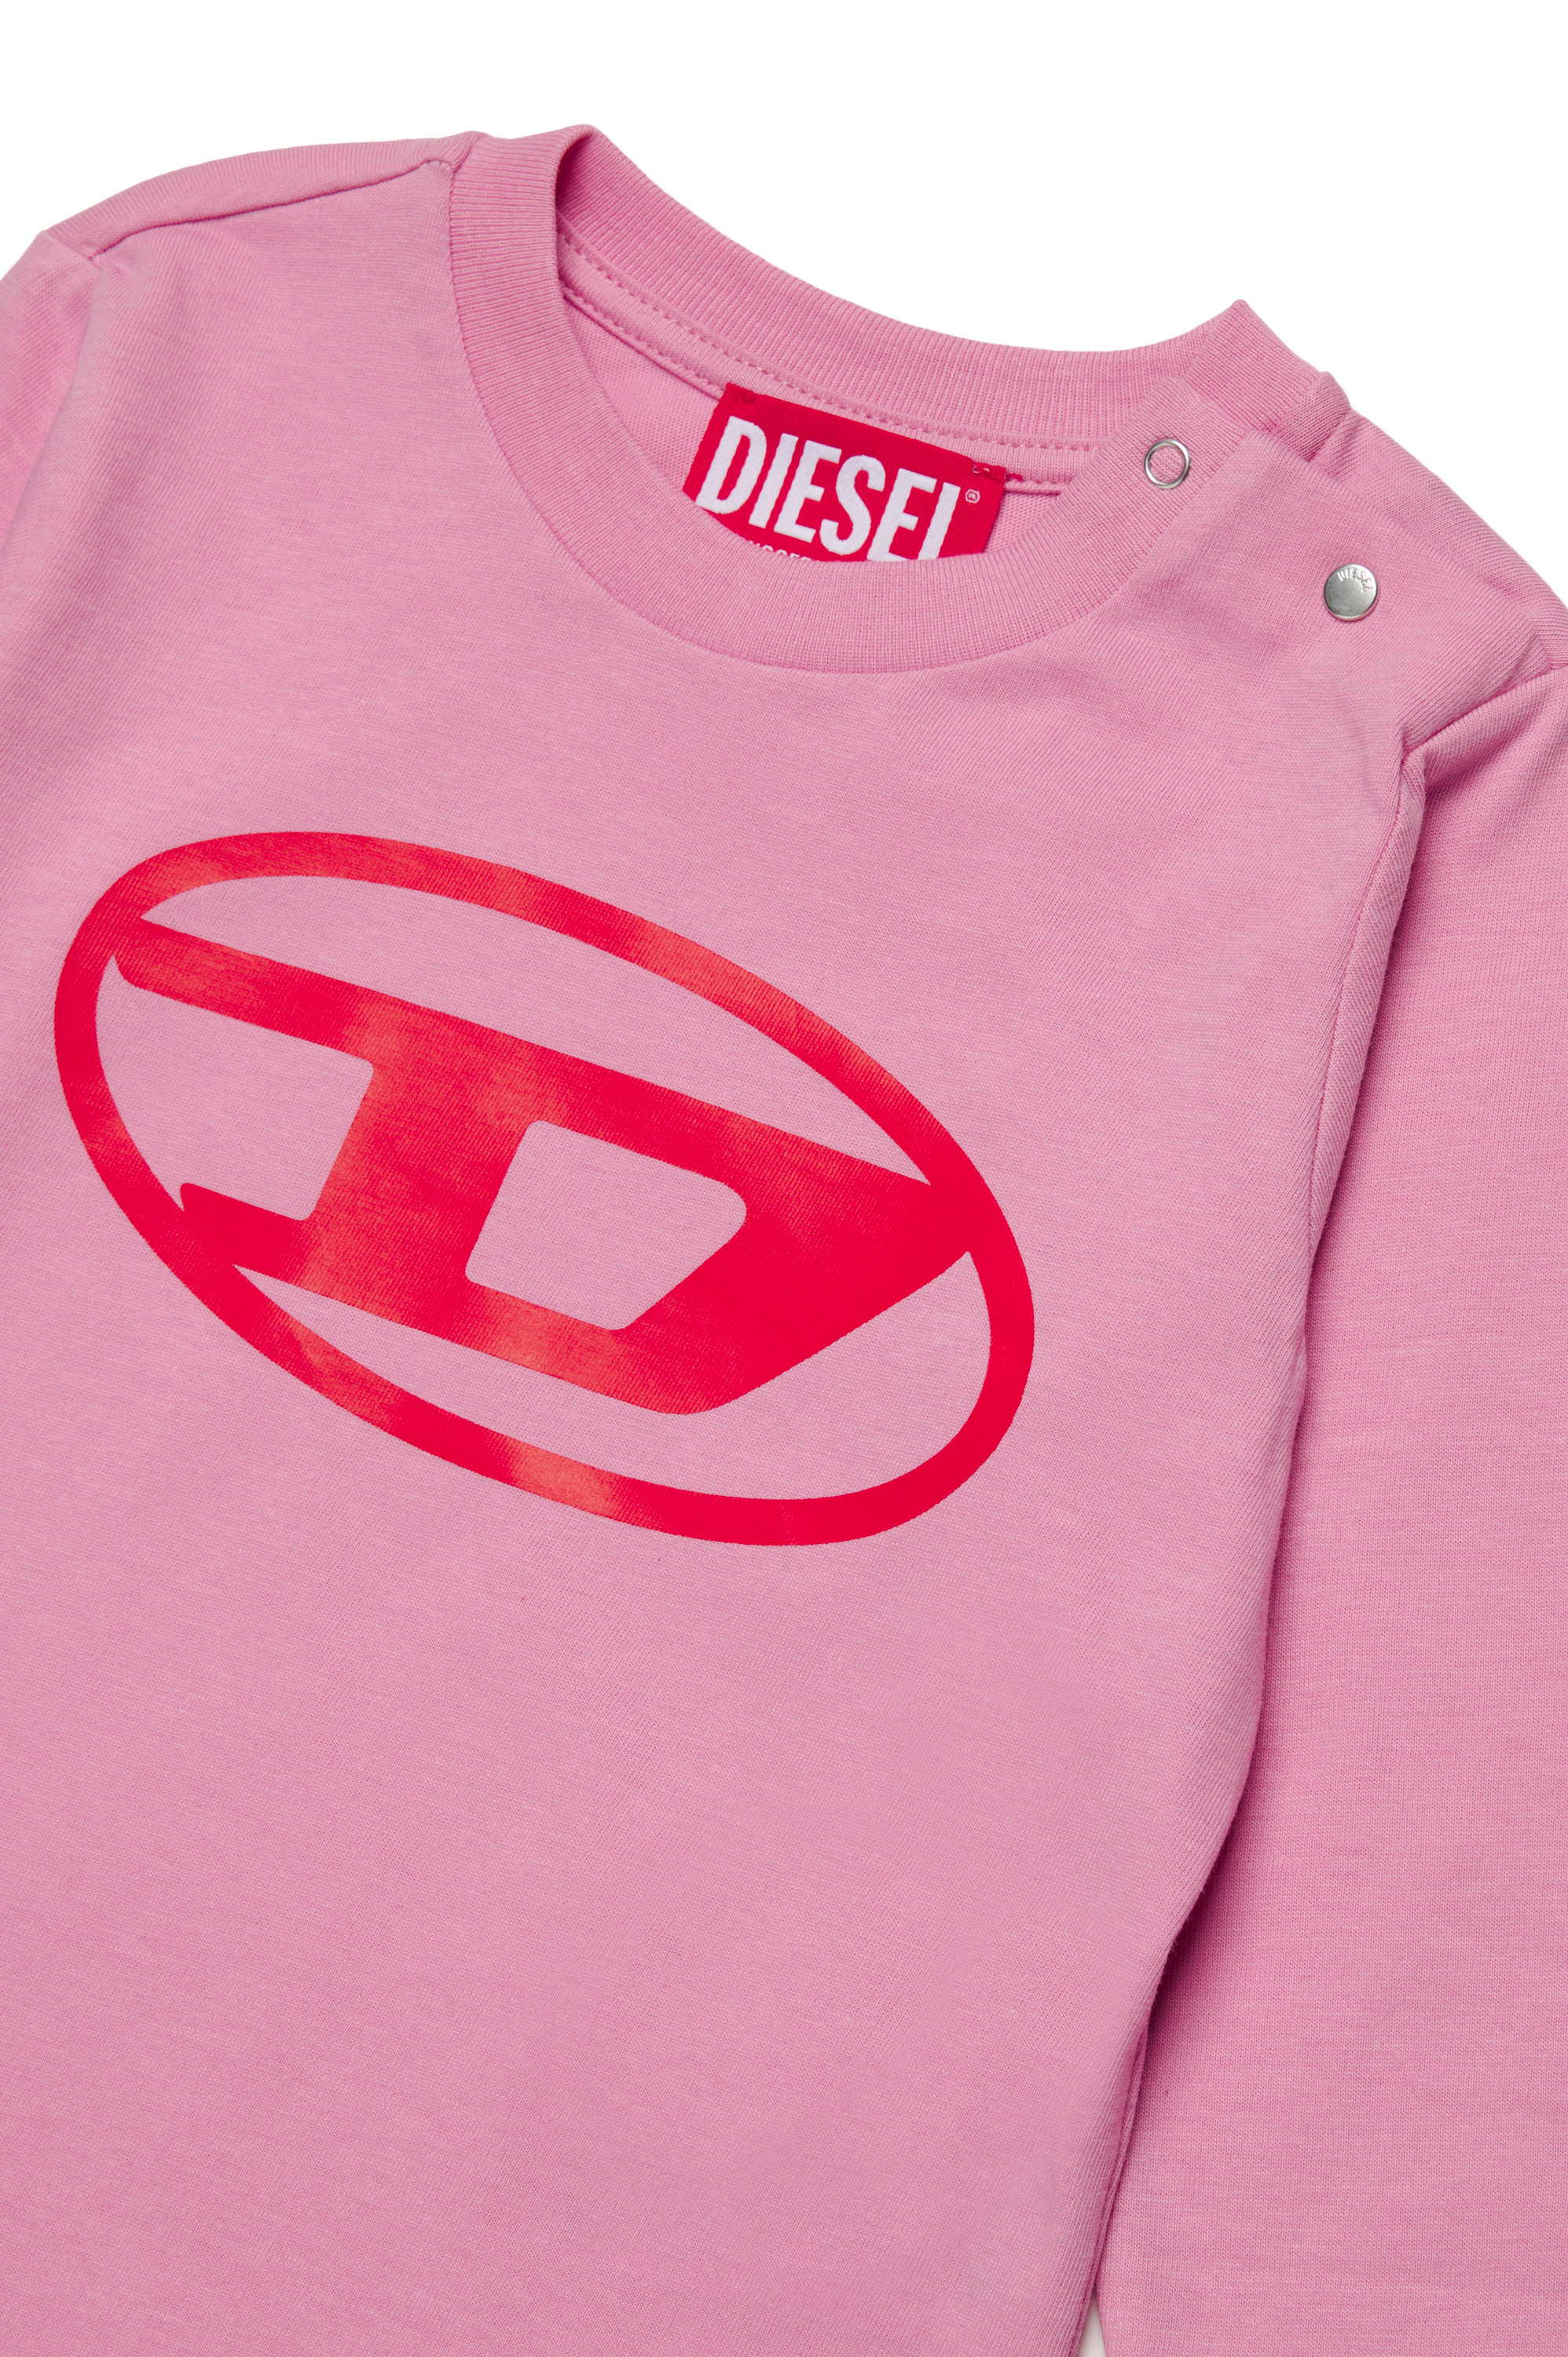 Diesel - TCERBLSB, Mixte T-shirt à manches longues avec Oval D in Rose - Image 3